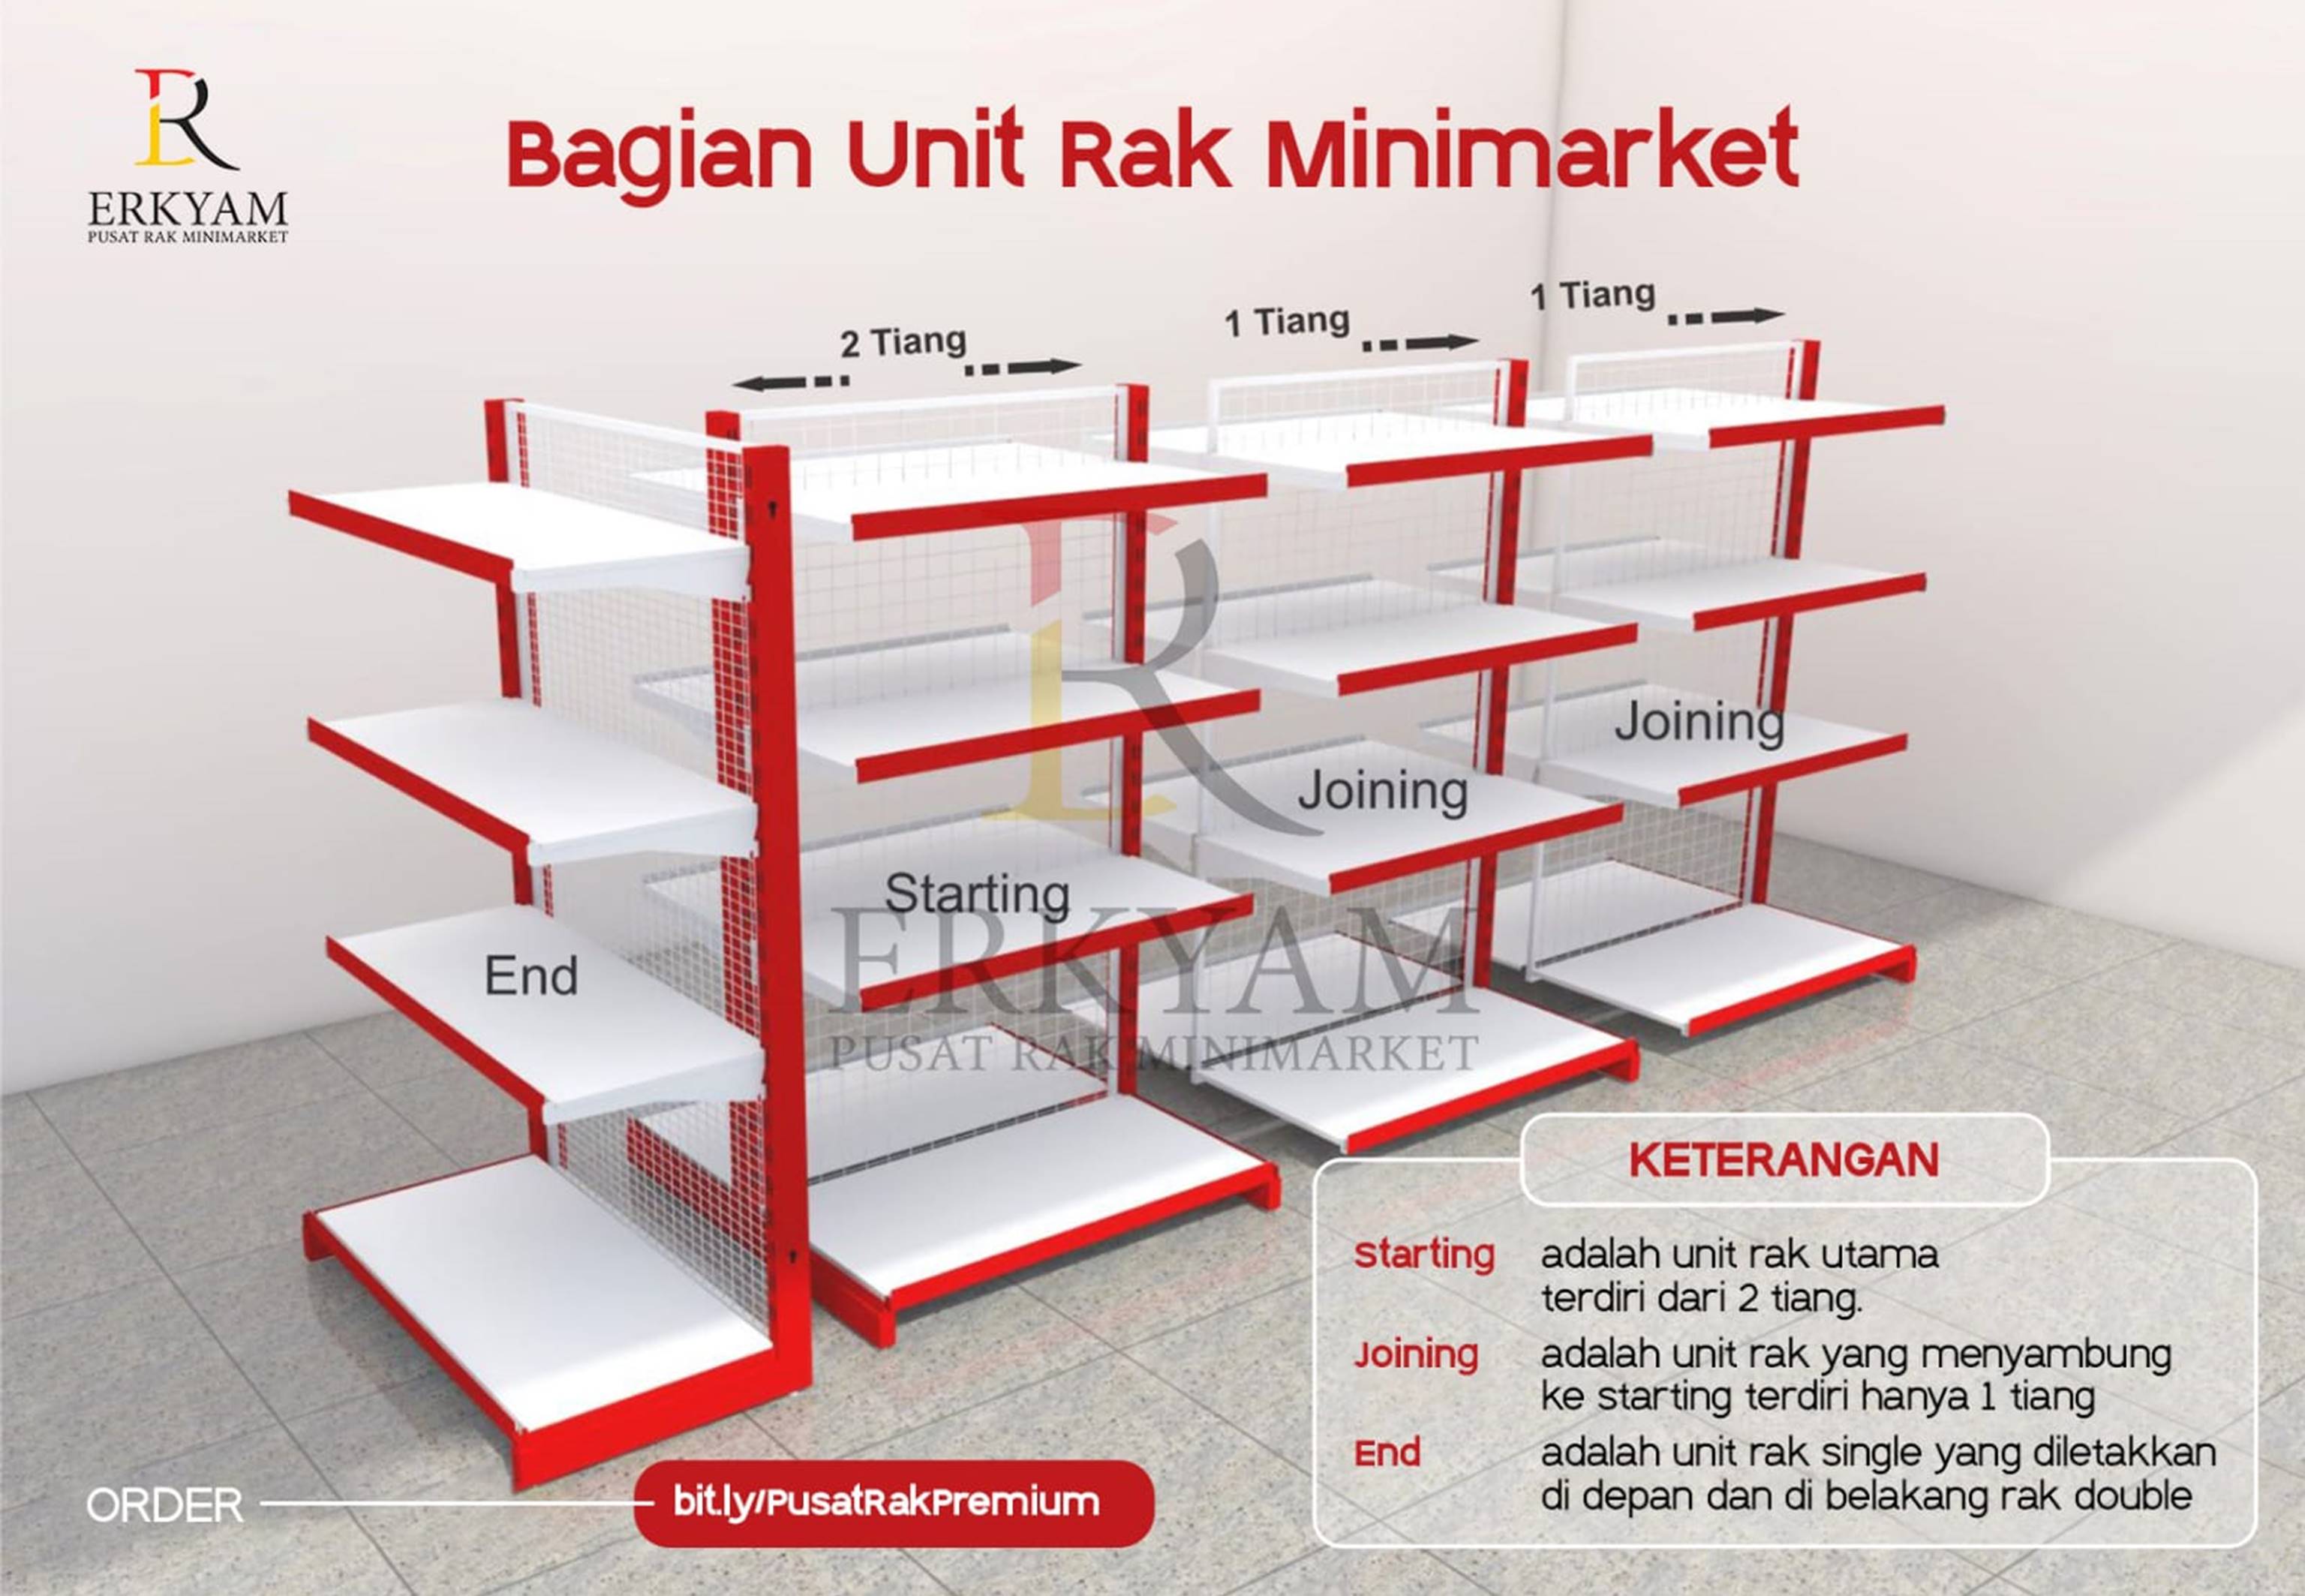 ERKYAM Distributor Rak Display area Empat Lawang Sumatera Selatan